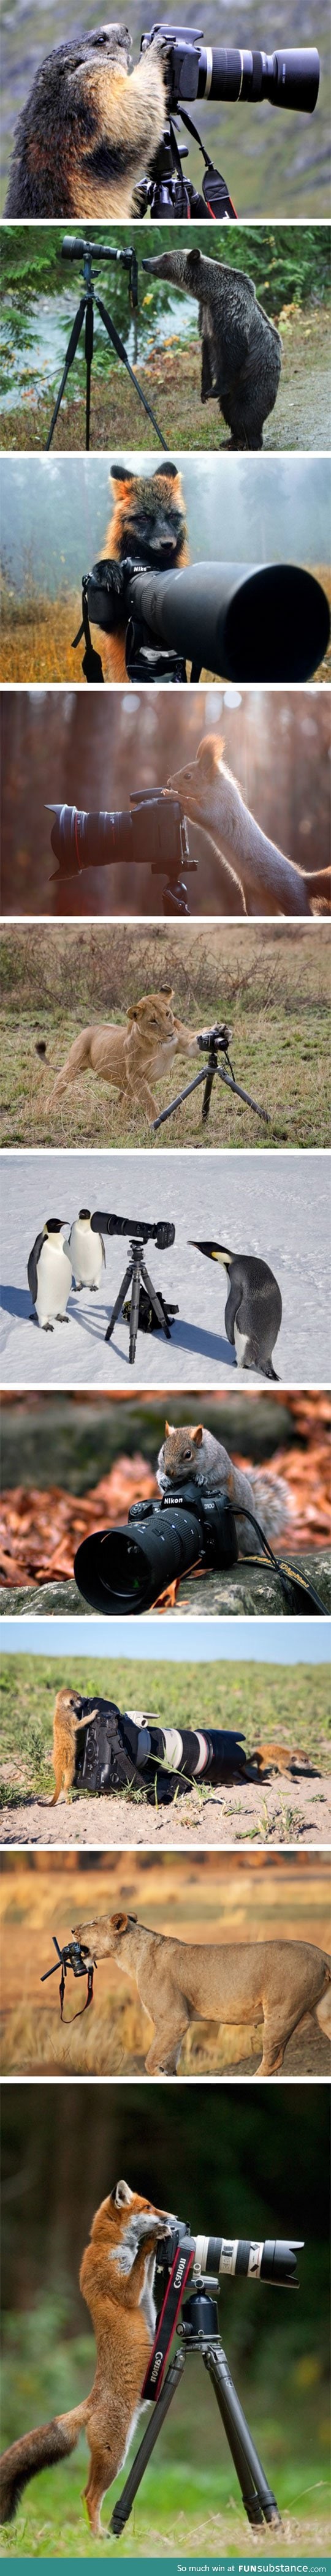 Animal photographers